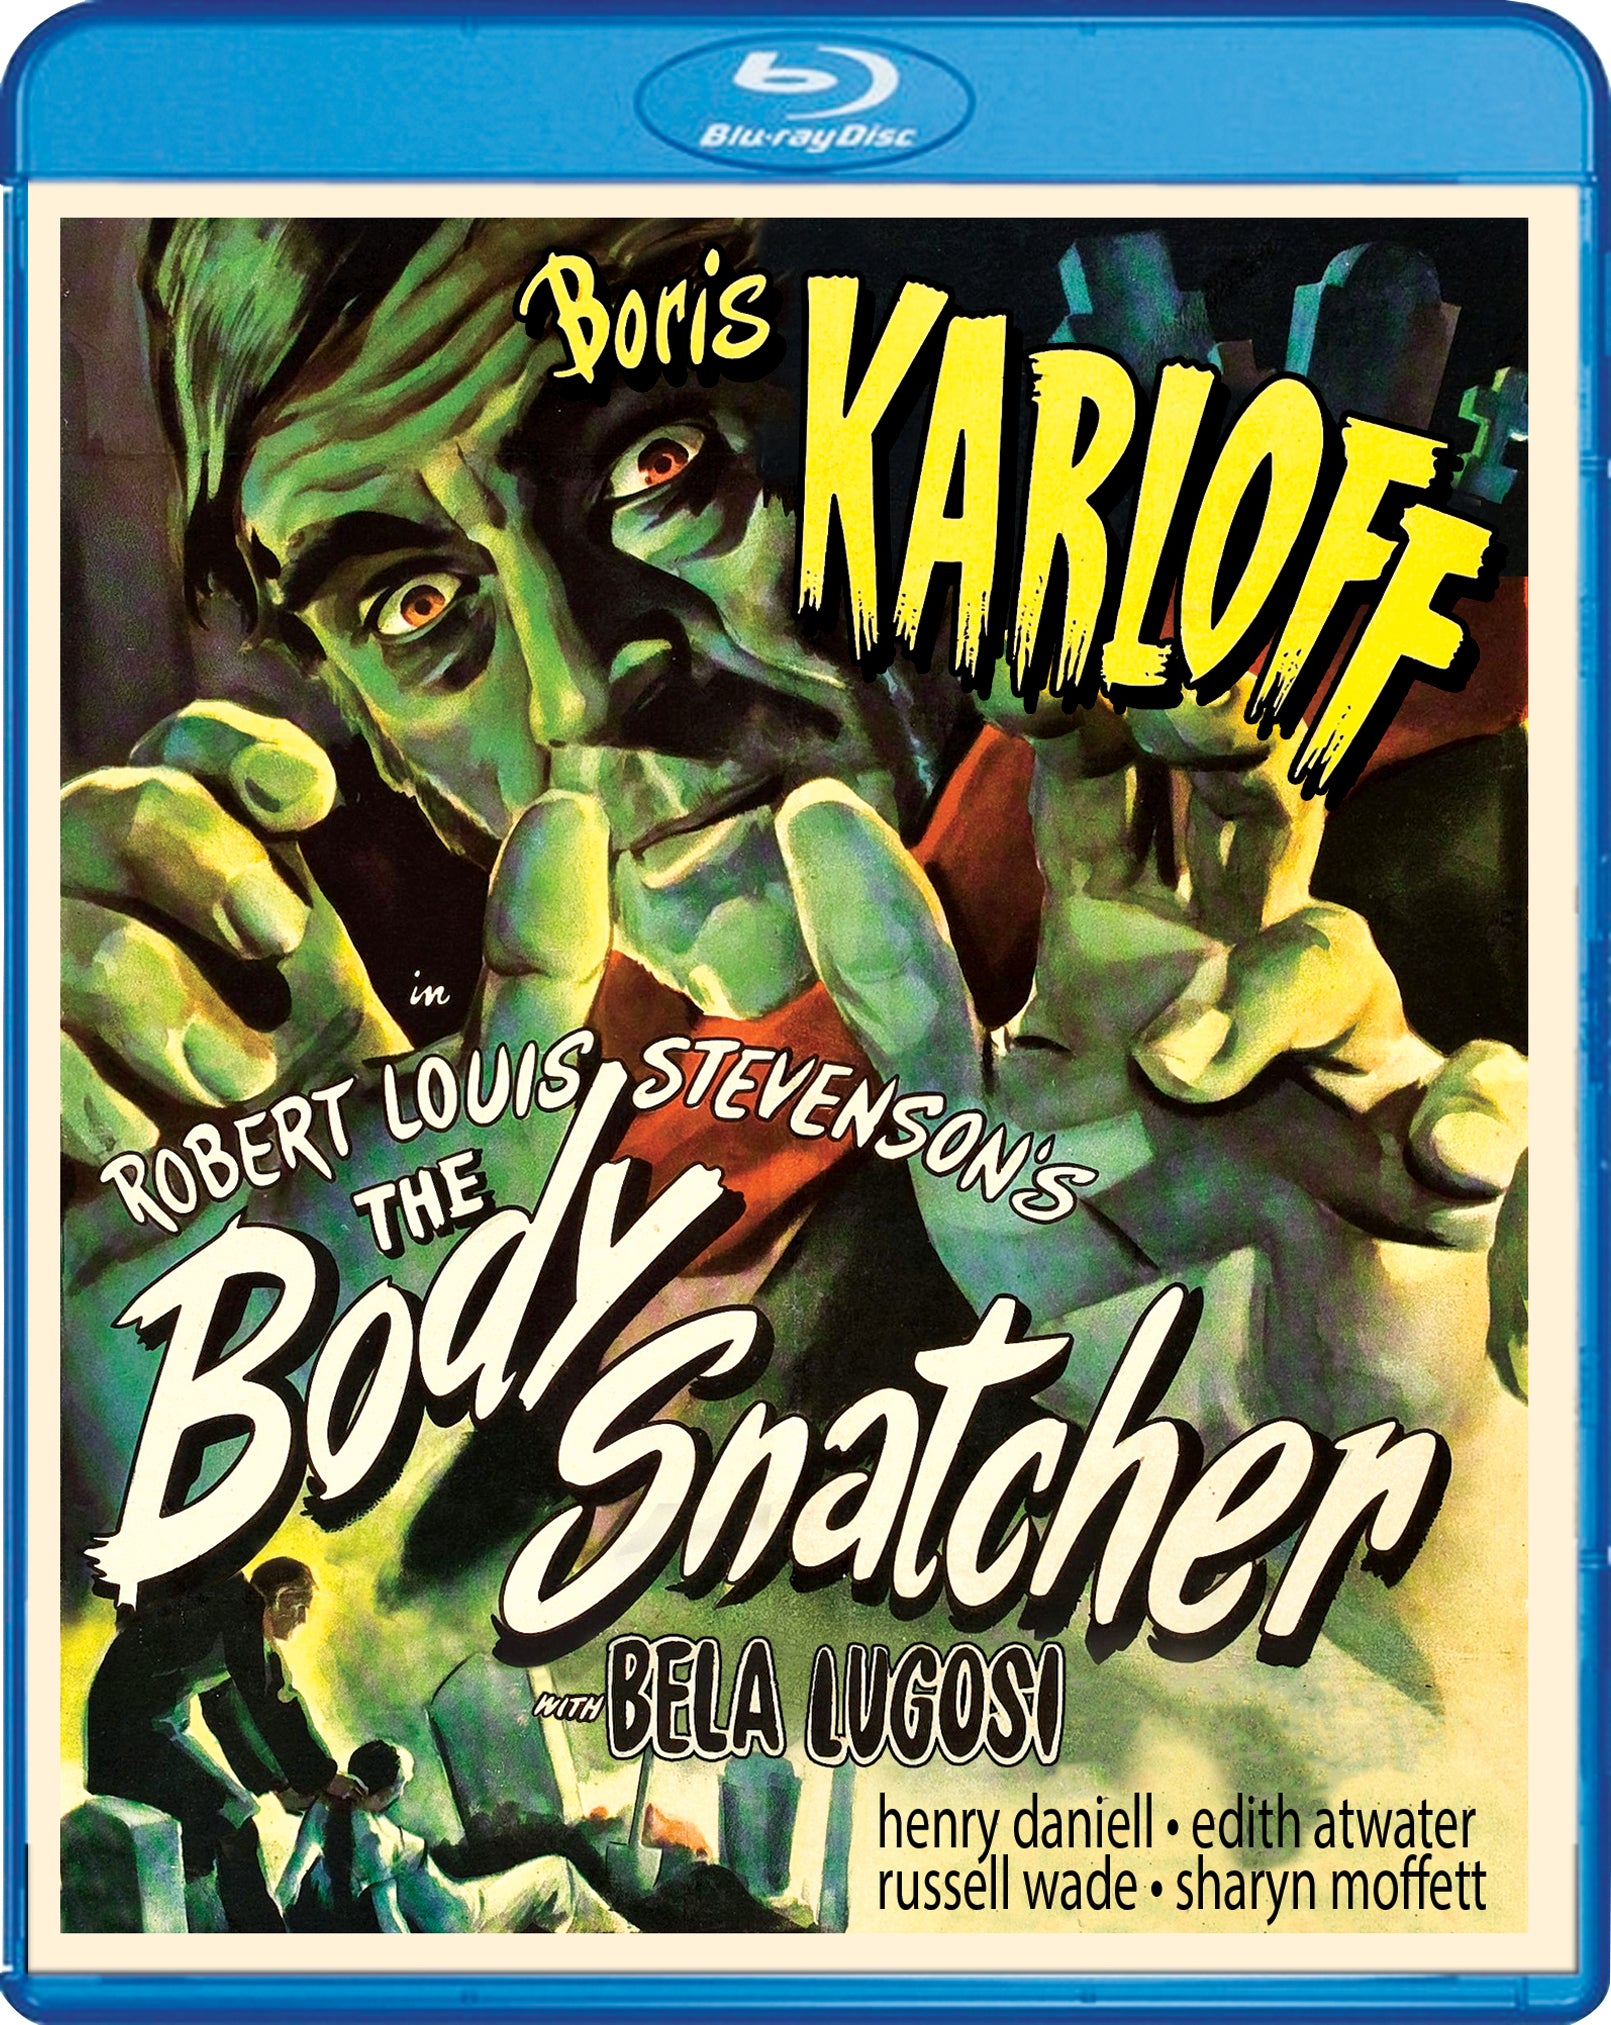 Body Snatcher [Blu-ray] cover art